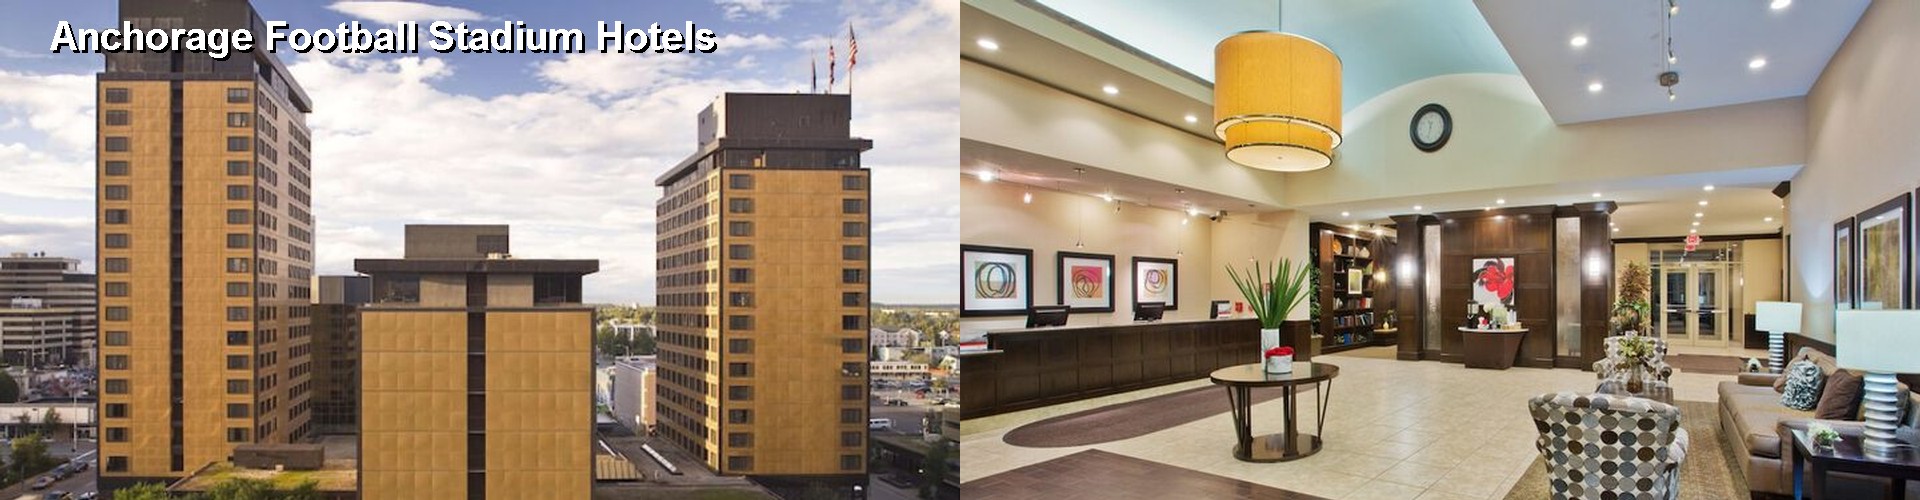 3 Best Hotels near Anchorage Football Stadium